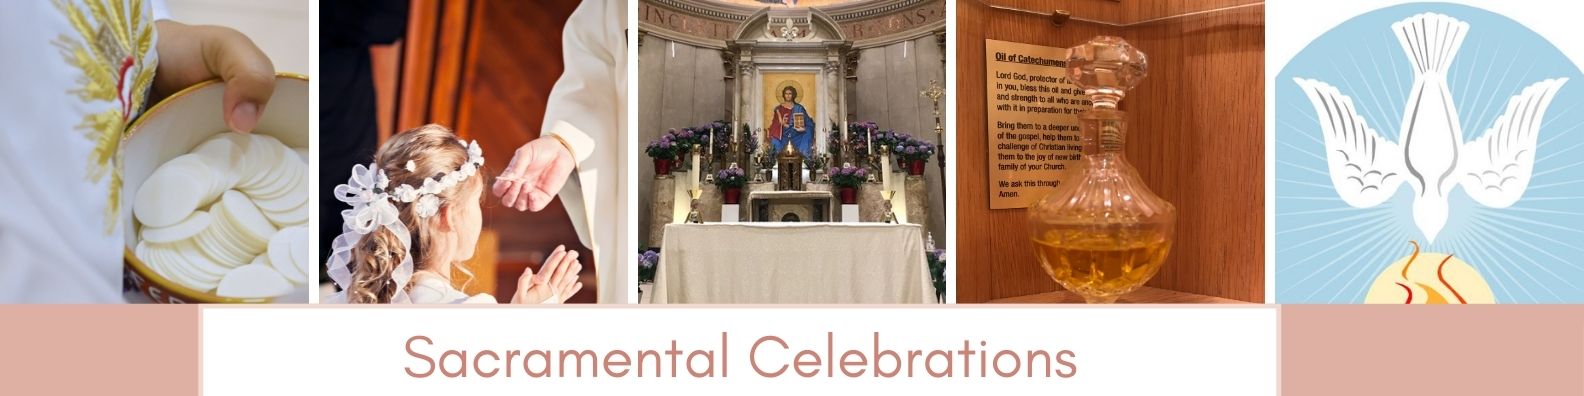 Sacramental Celebrations 2